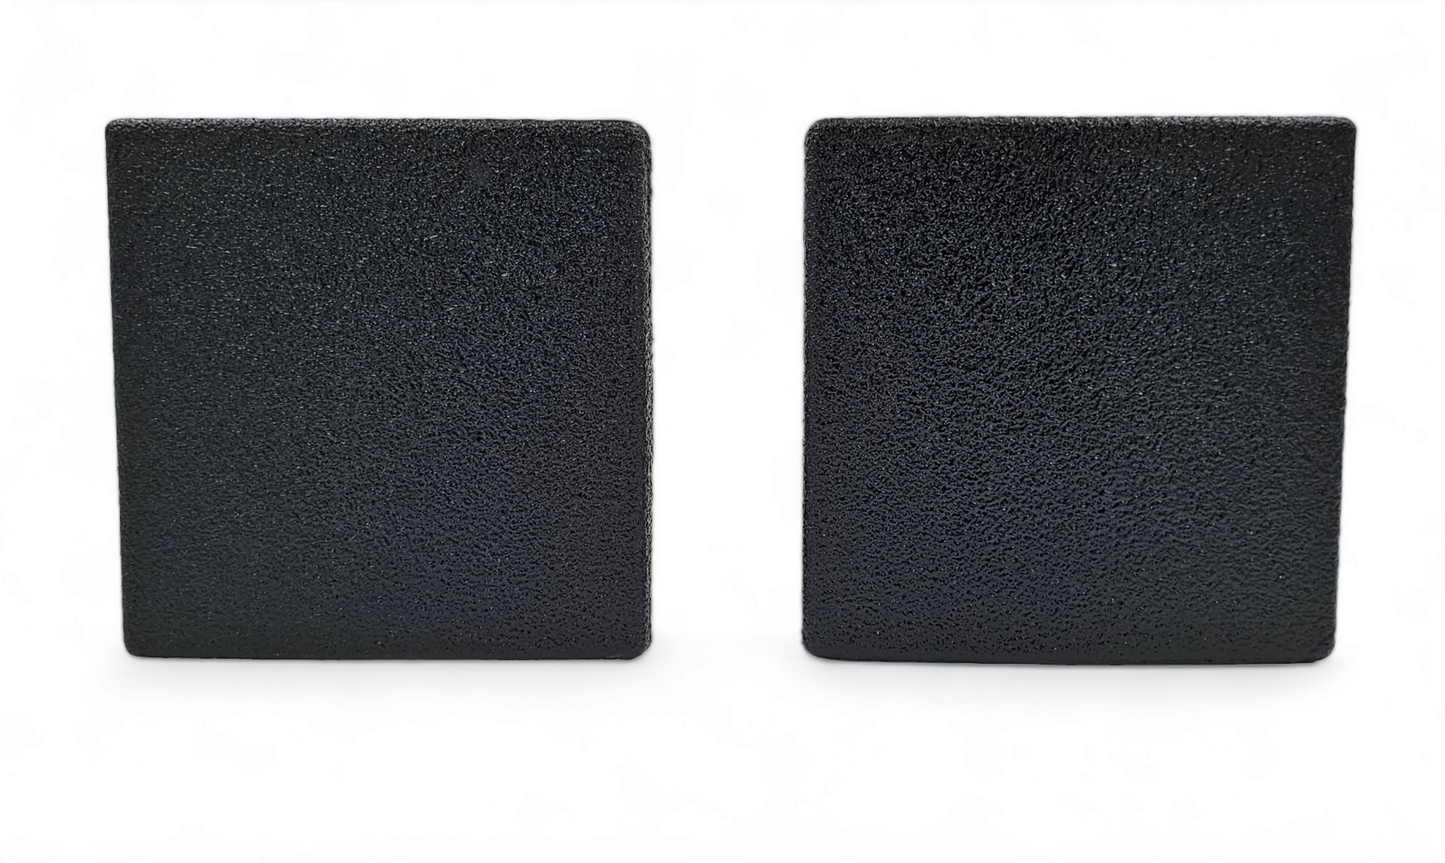 Armor - Side Plates | Black Coated LVL 3+ Steel 6×6 Ballistic Side Pocket Plates